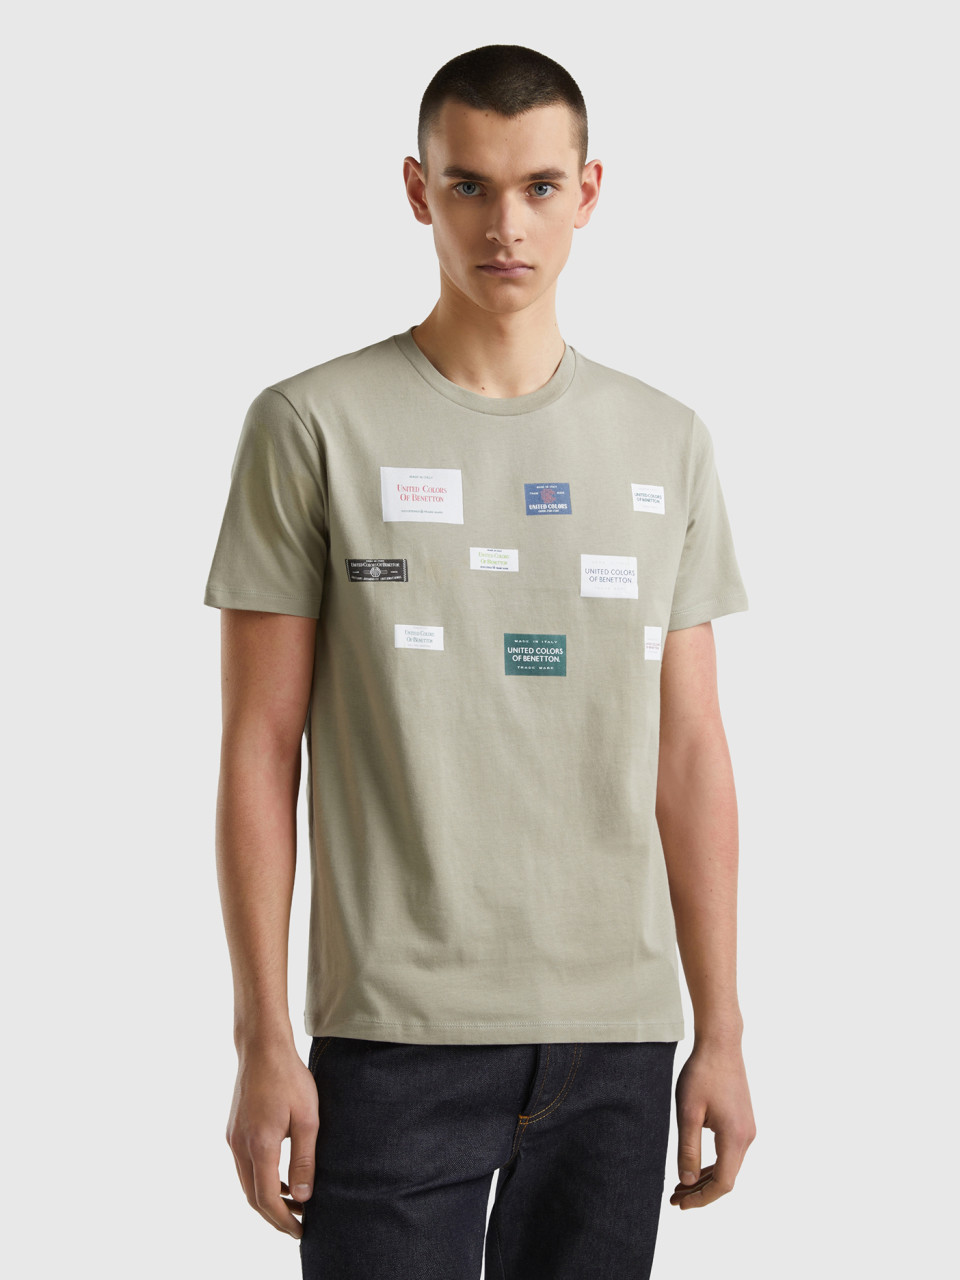 Benetton, Relaxed Fit T-shirt With Print, Light Green, Men